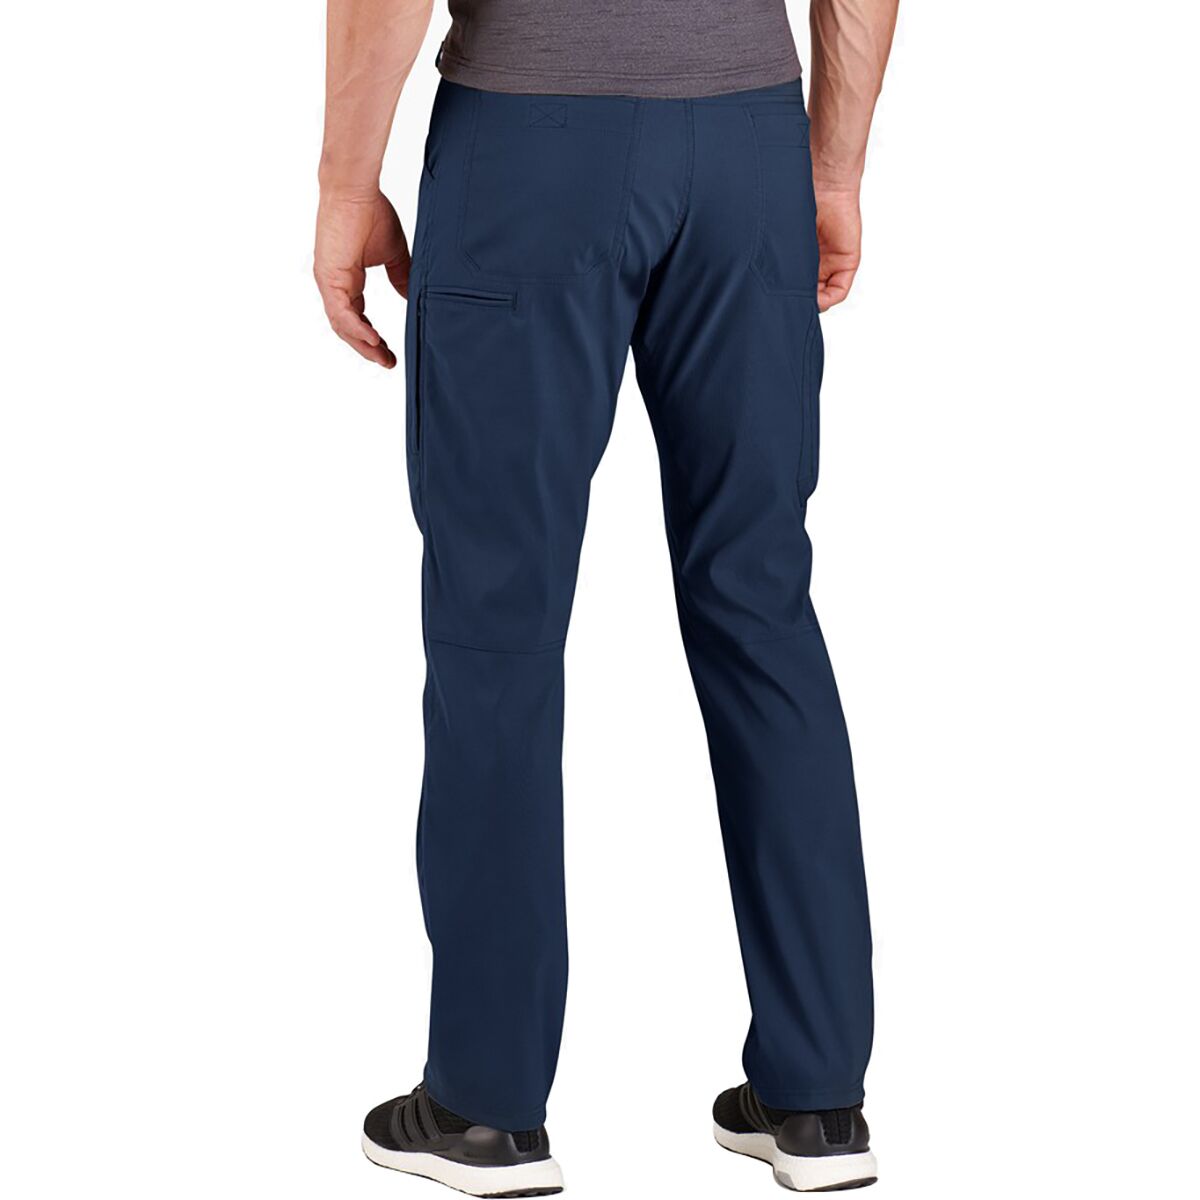 Wrangler Outdoor Series Hiking Pants Men's 30x30 Gray 95% Nylon 5% Spandex